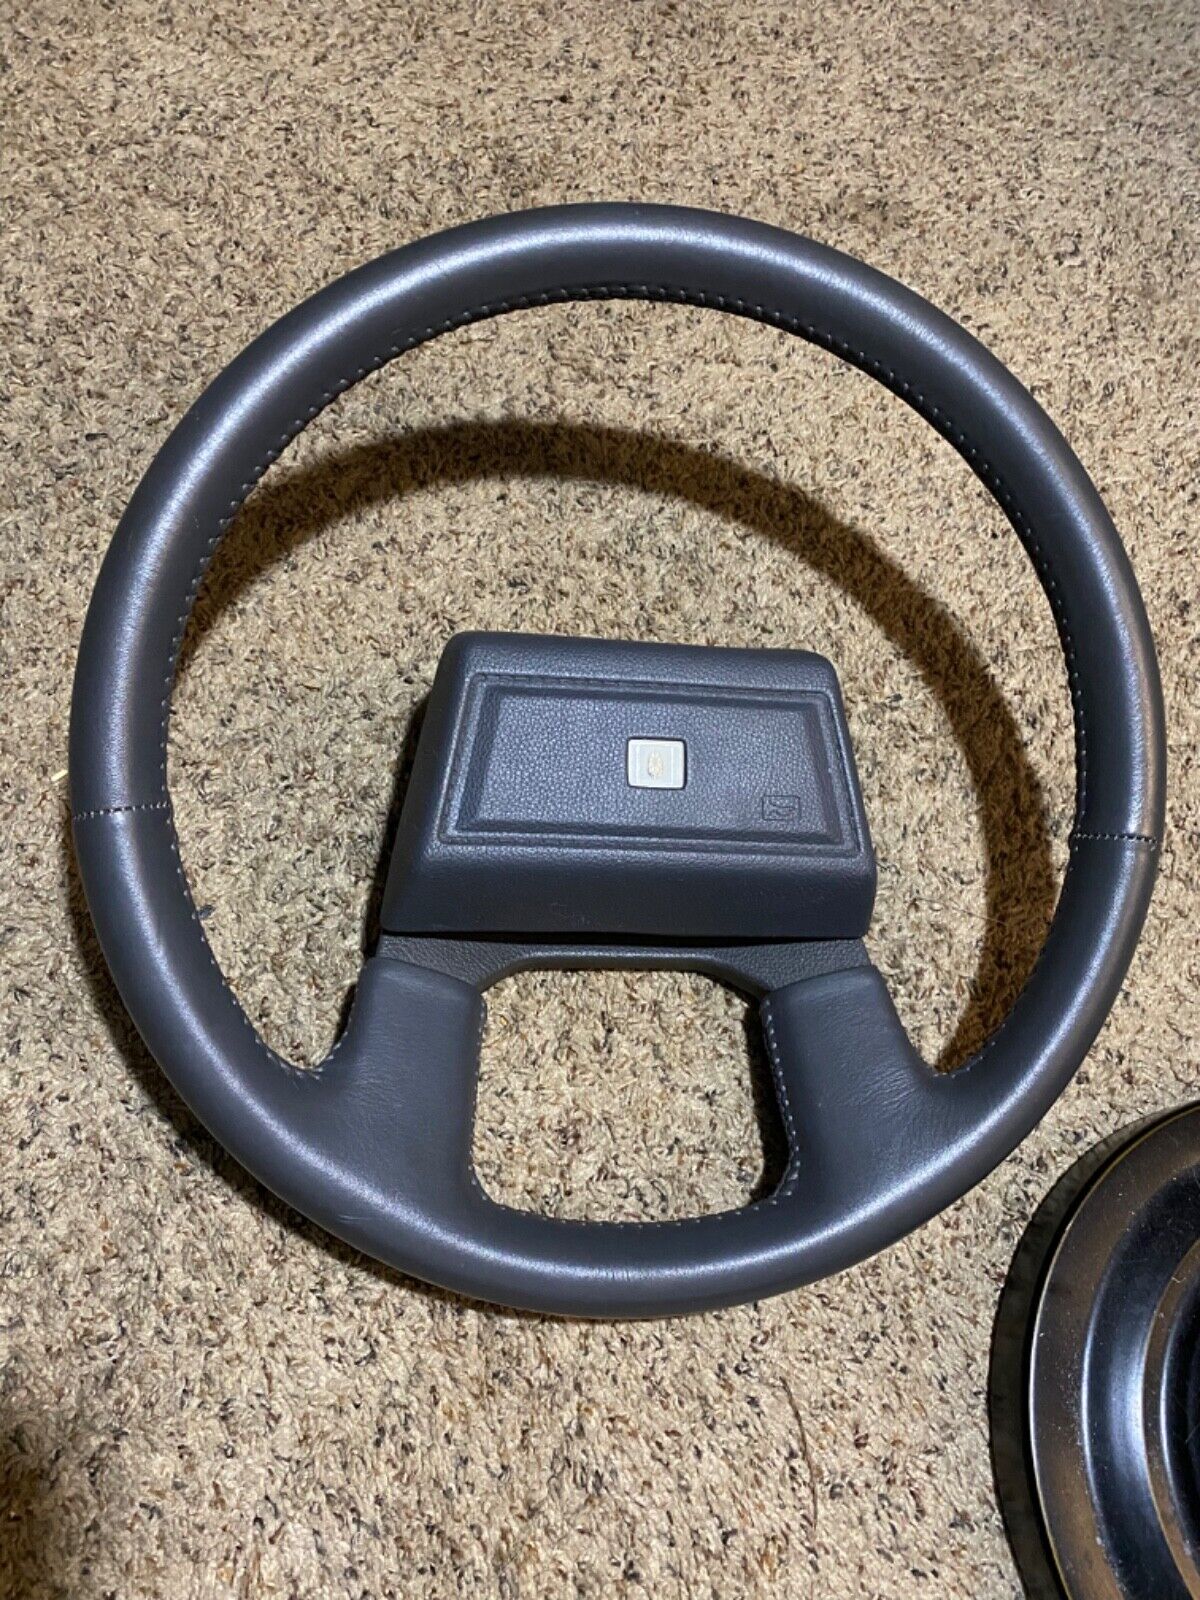 TOYOTA CRESSIDA steering wheel Grey mx73 1985-1988 genuine oem rare condition